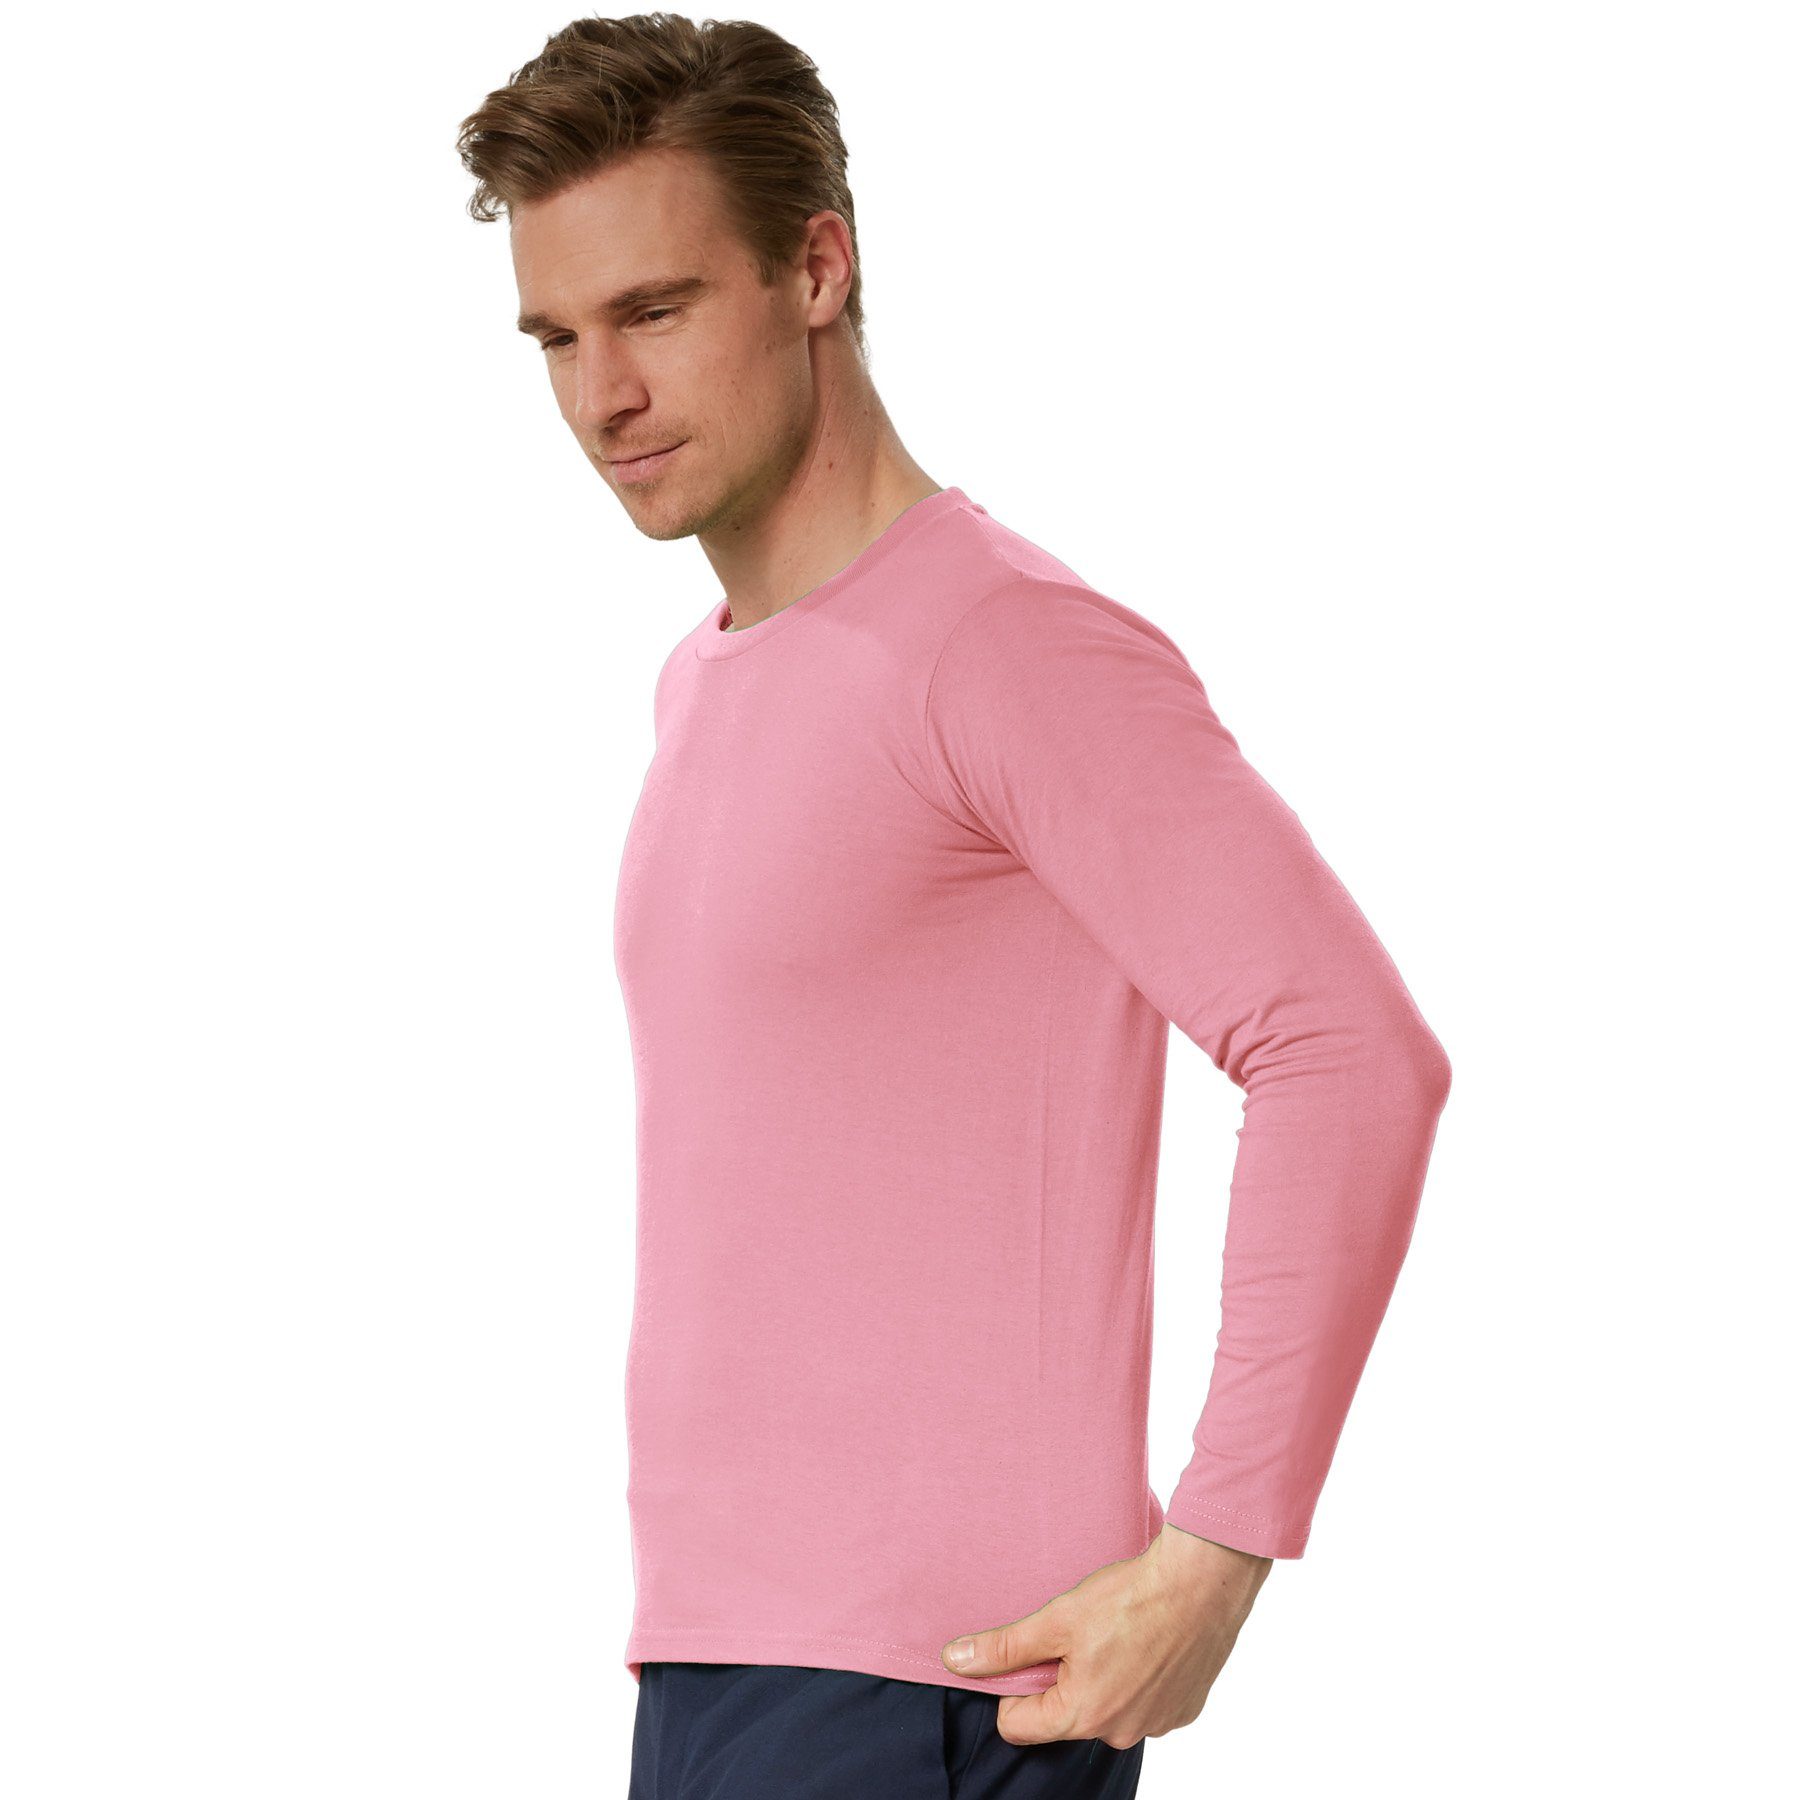 dressforfun Longsleeve Langarm-Shirt Rundhals Männer rosa